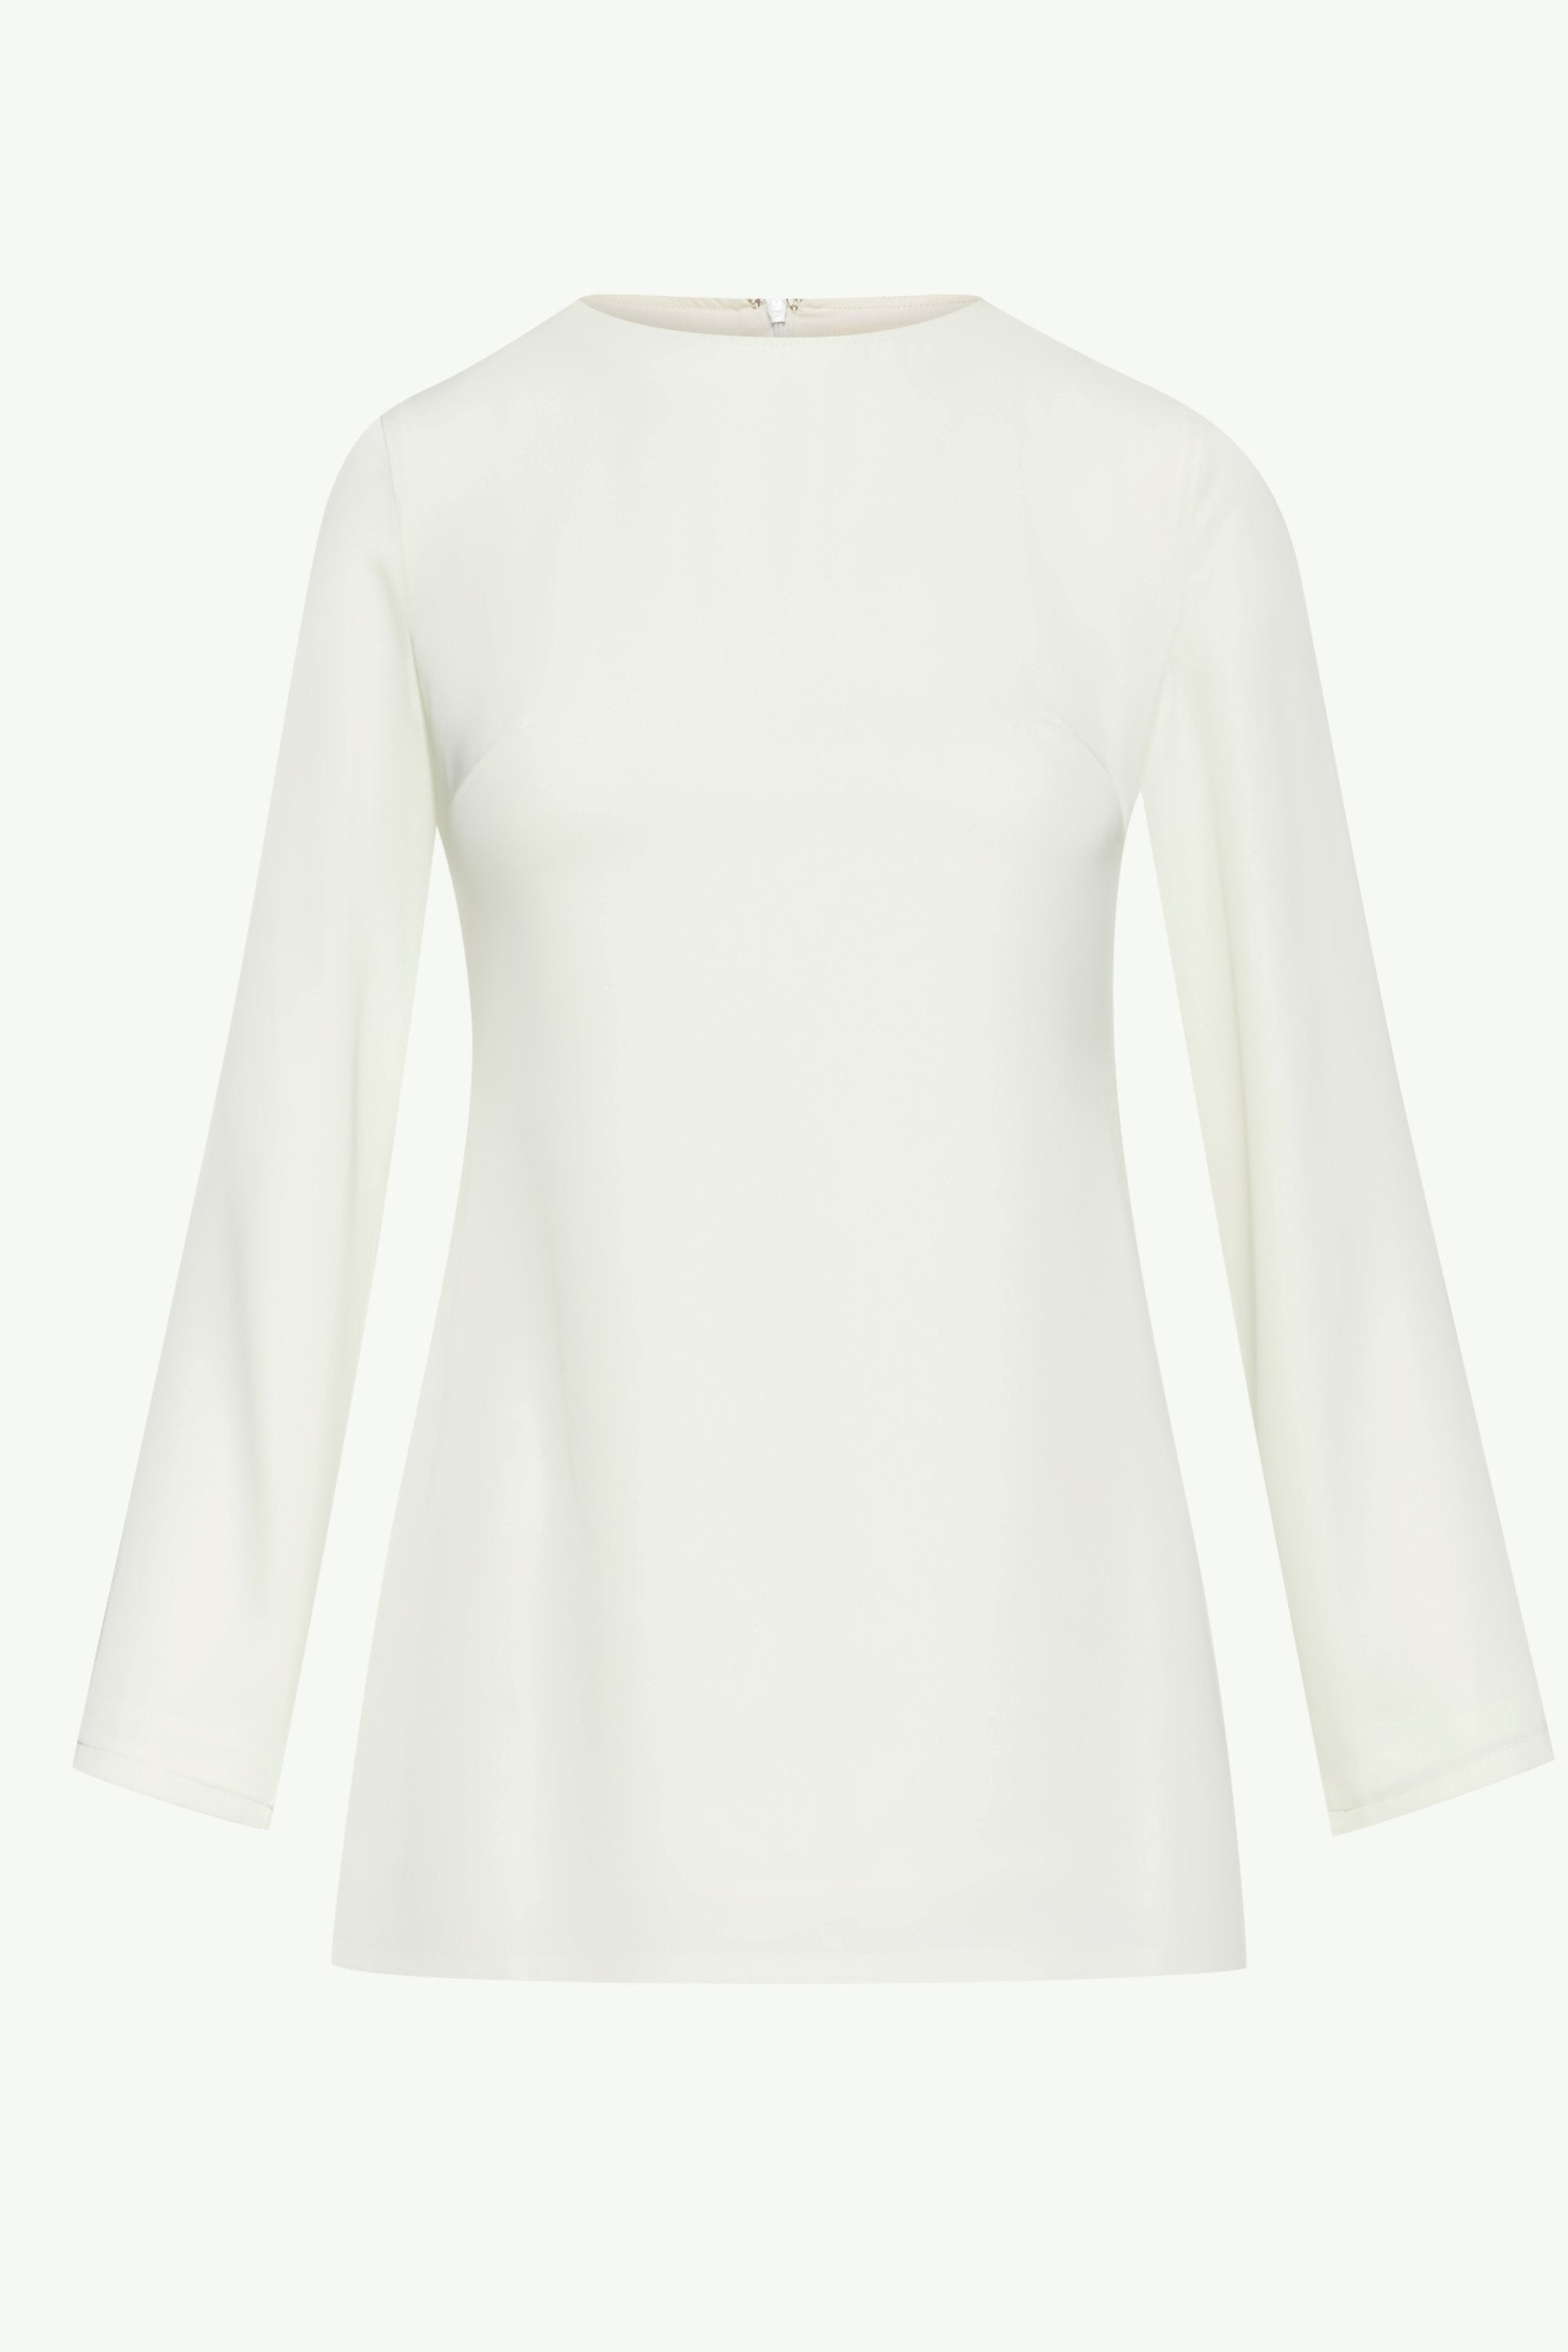 Amela Satin Top - Off White Clothing Veiled 